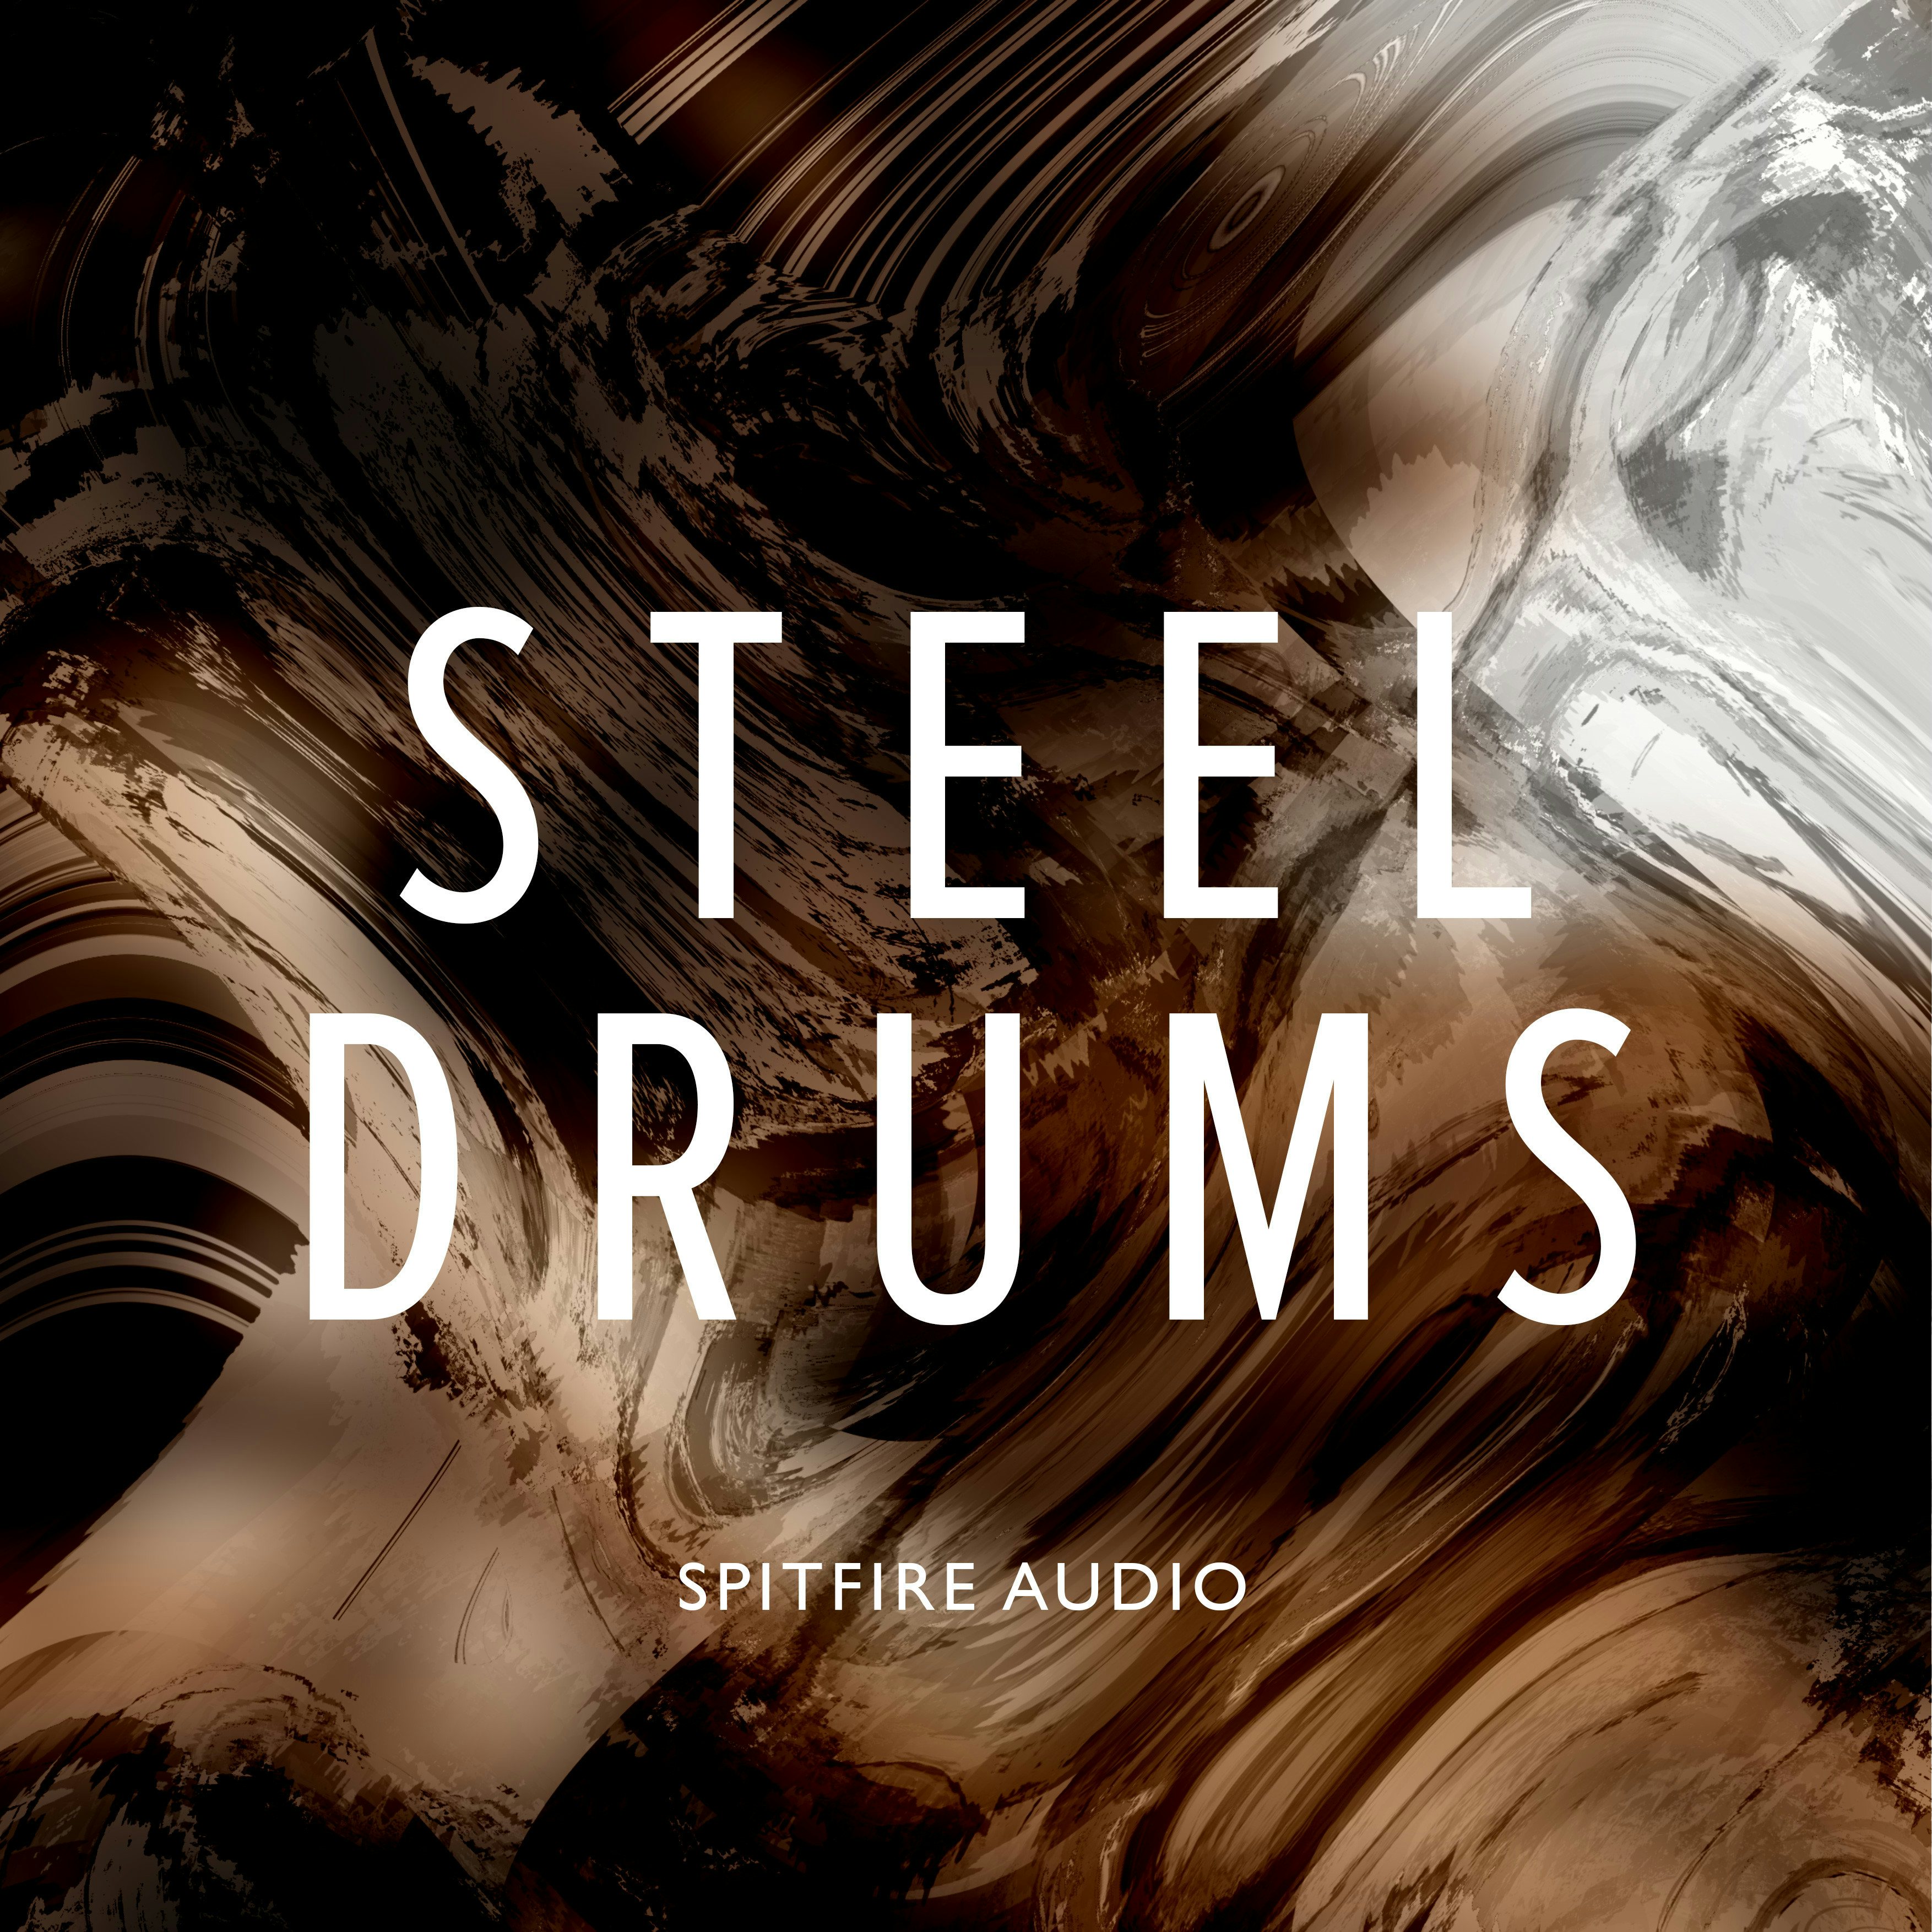 spitfire steel drums mac torrent